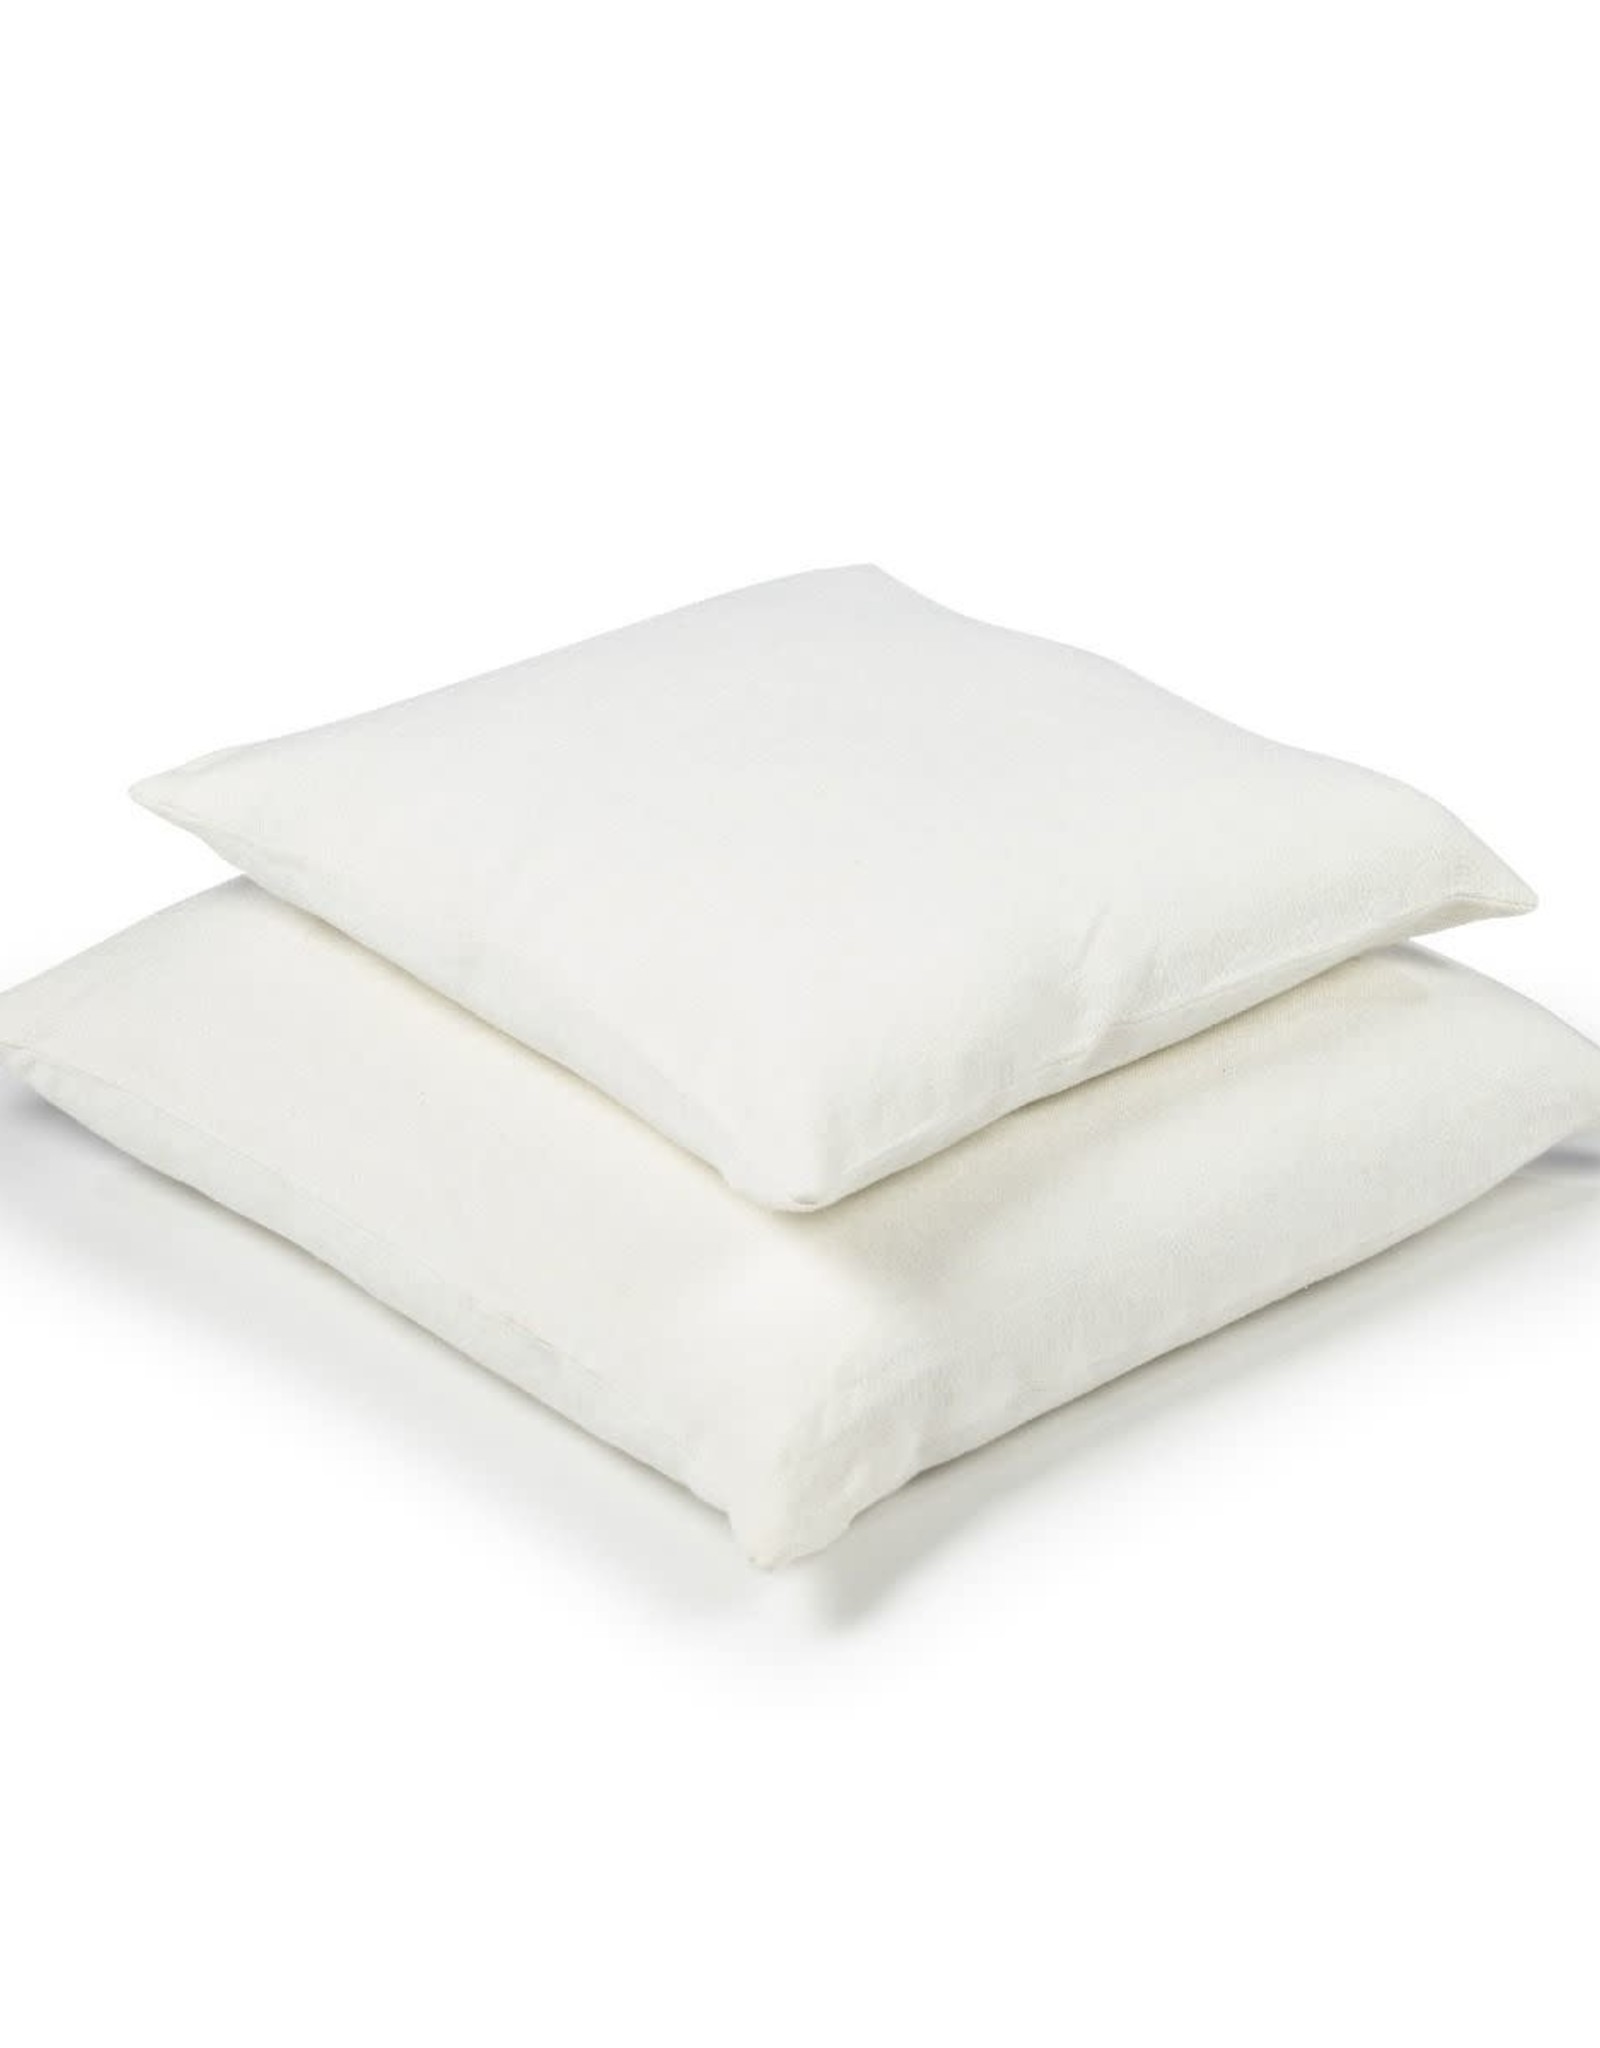 LIBECO LAGAE Pillow Hudson Oyster White 25x25